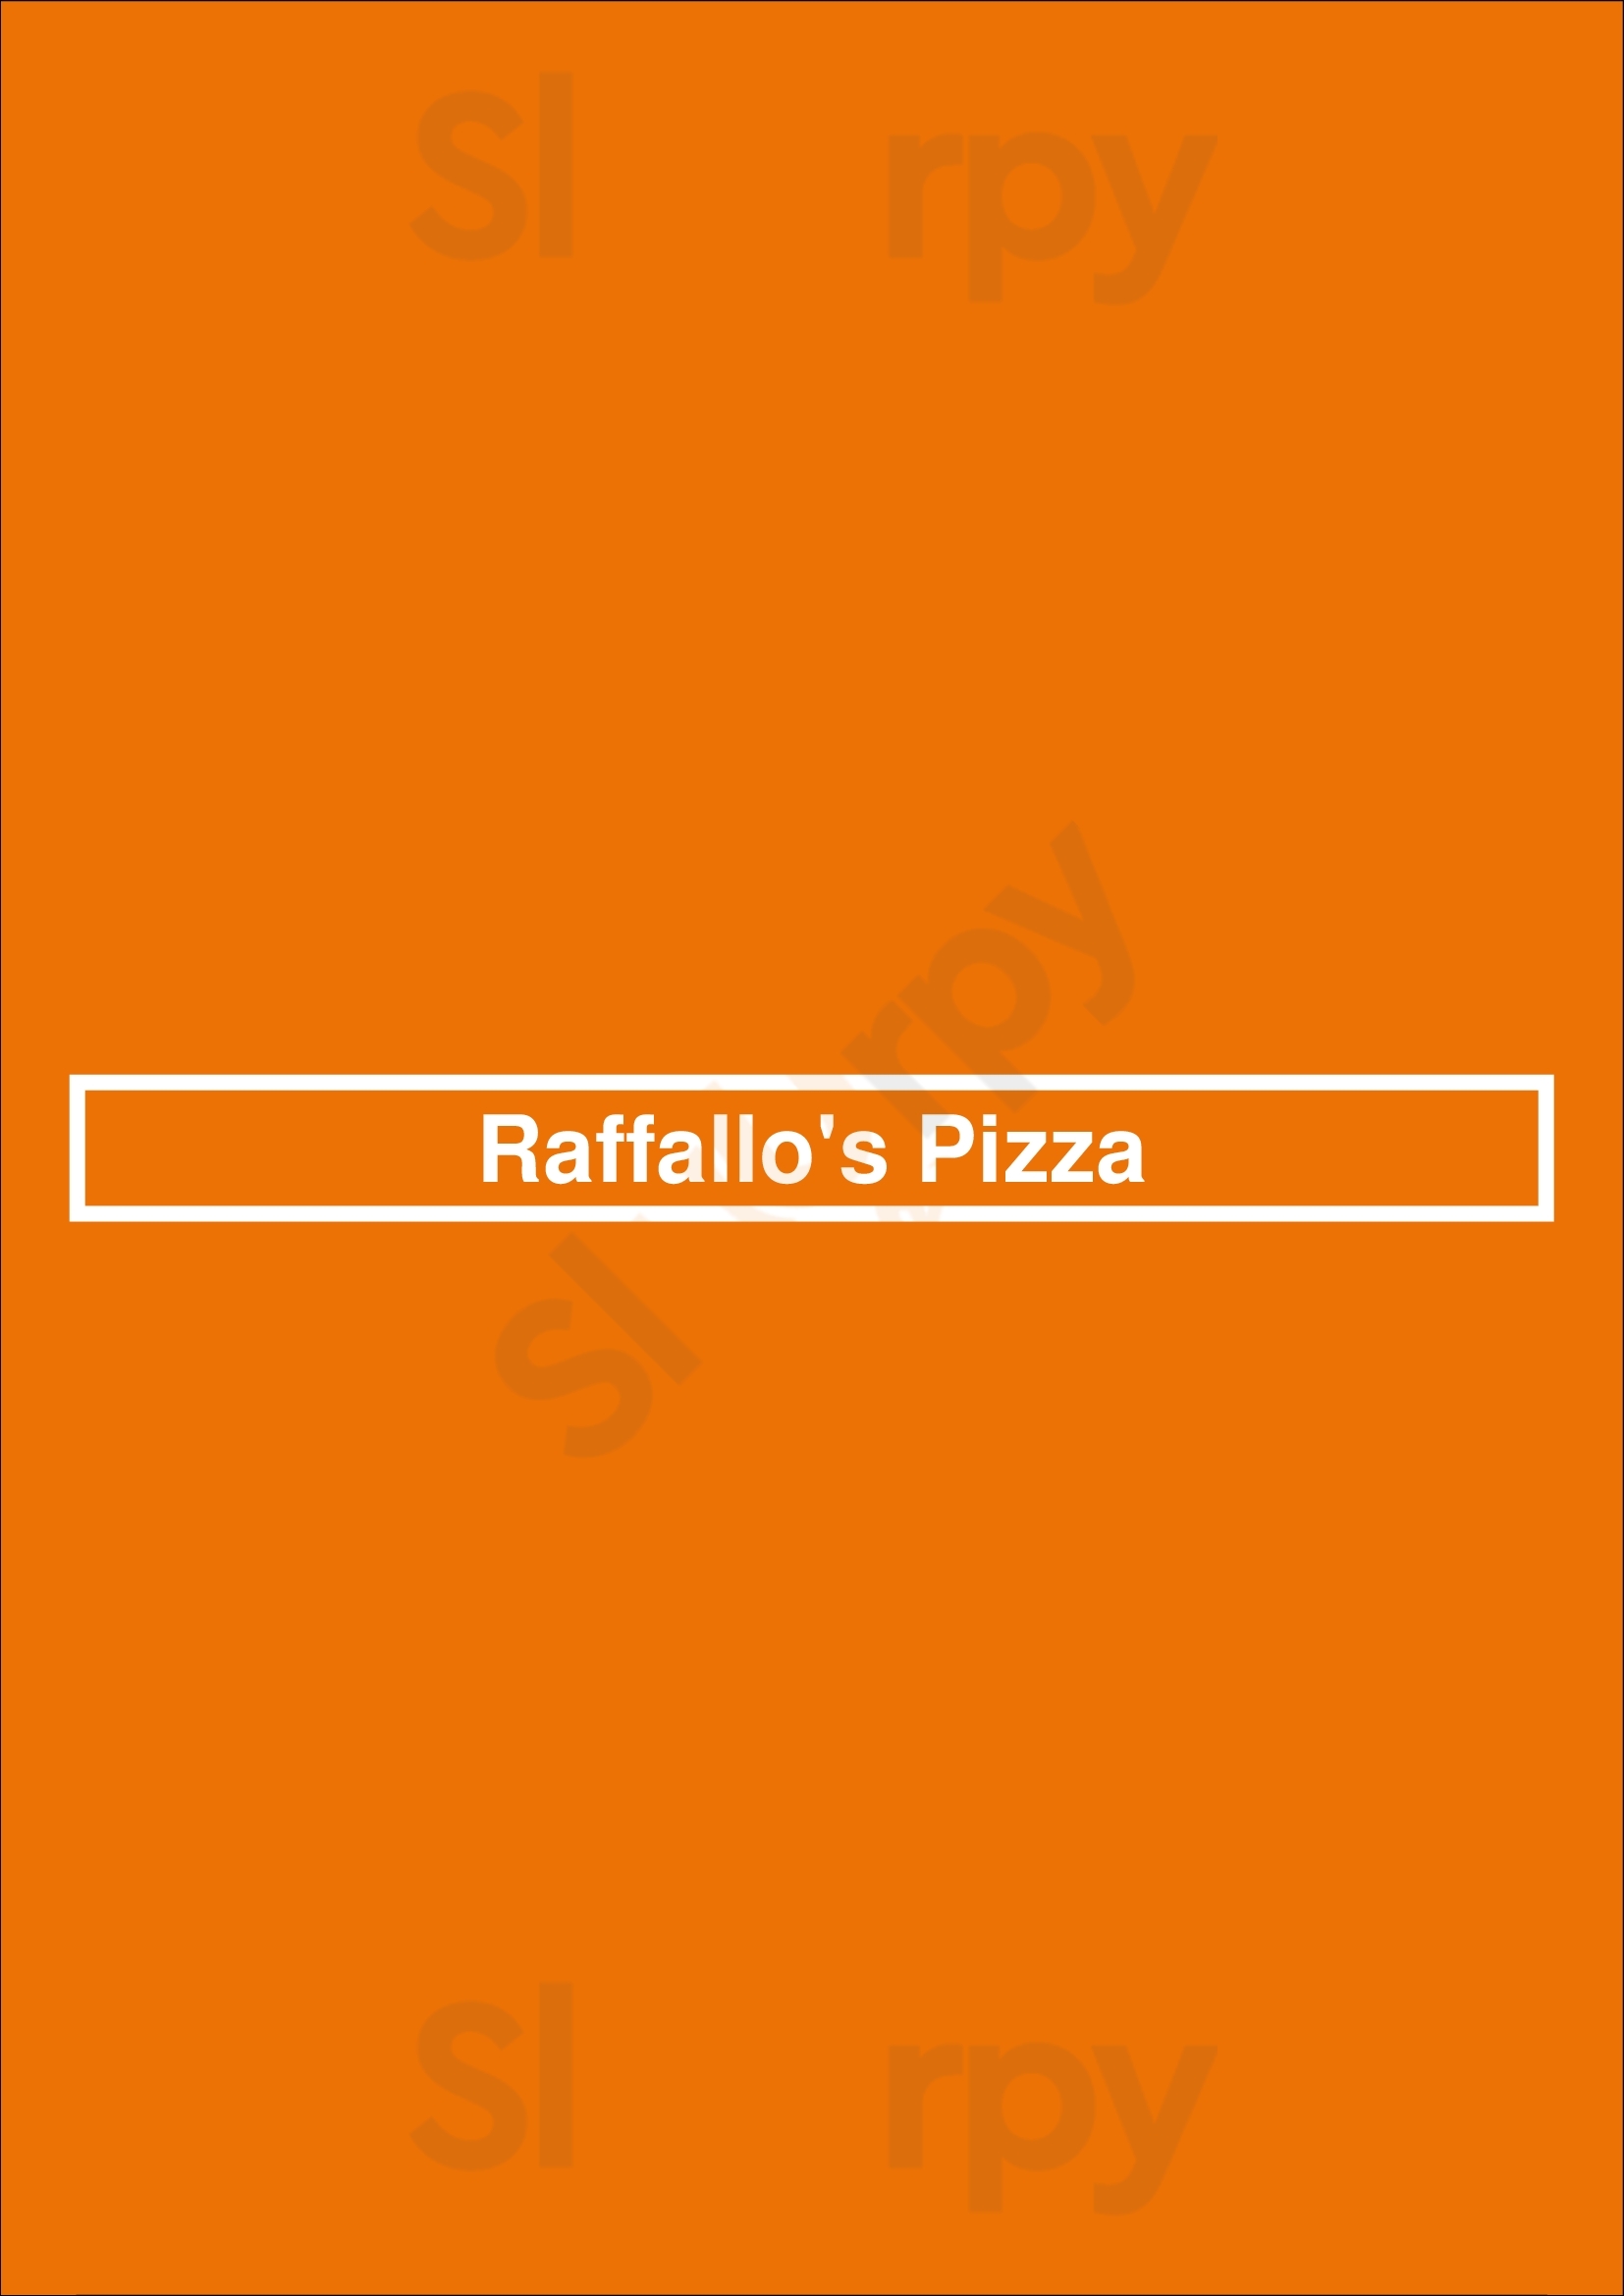 Raffallo's Pizza Los Angeles Menu - 1